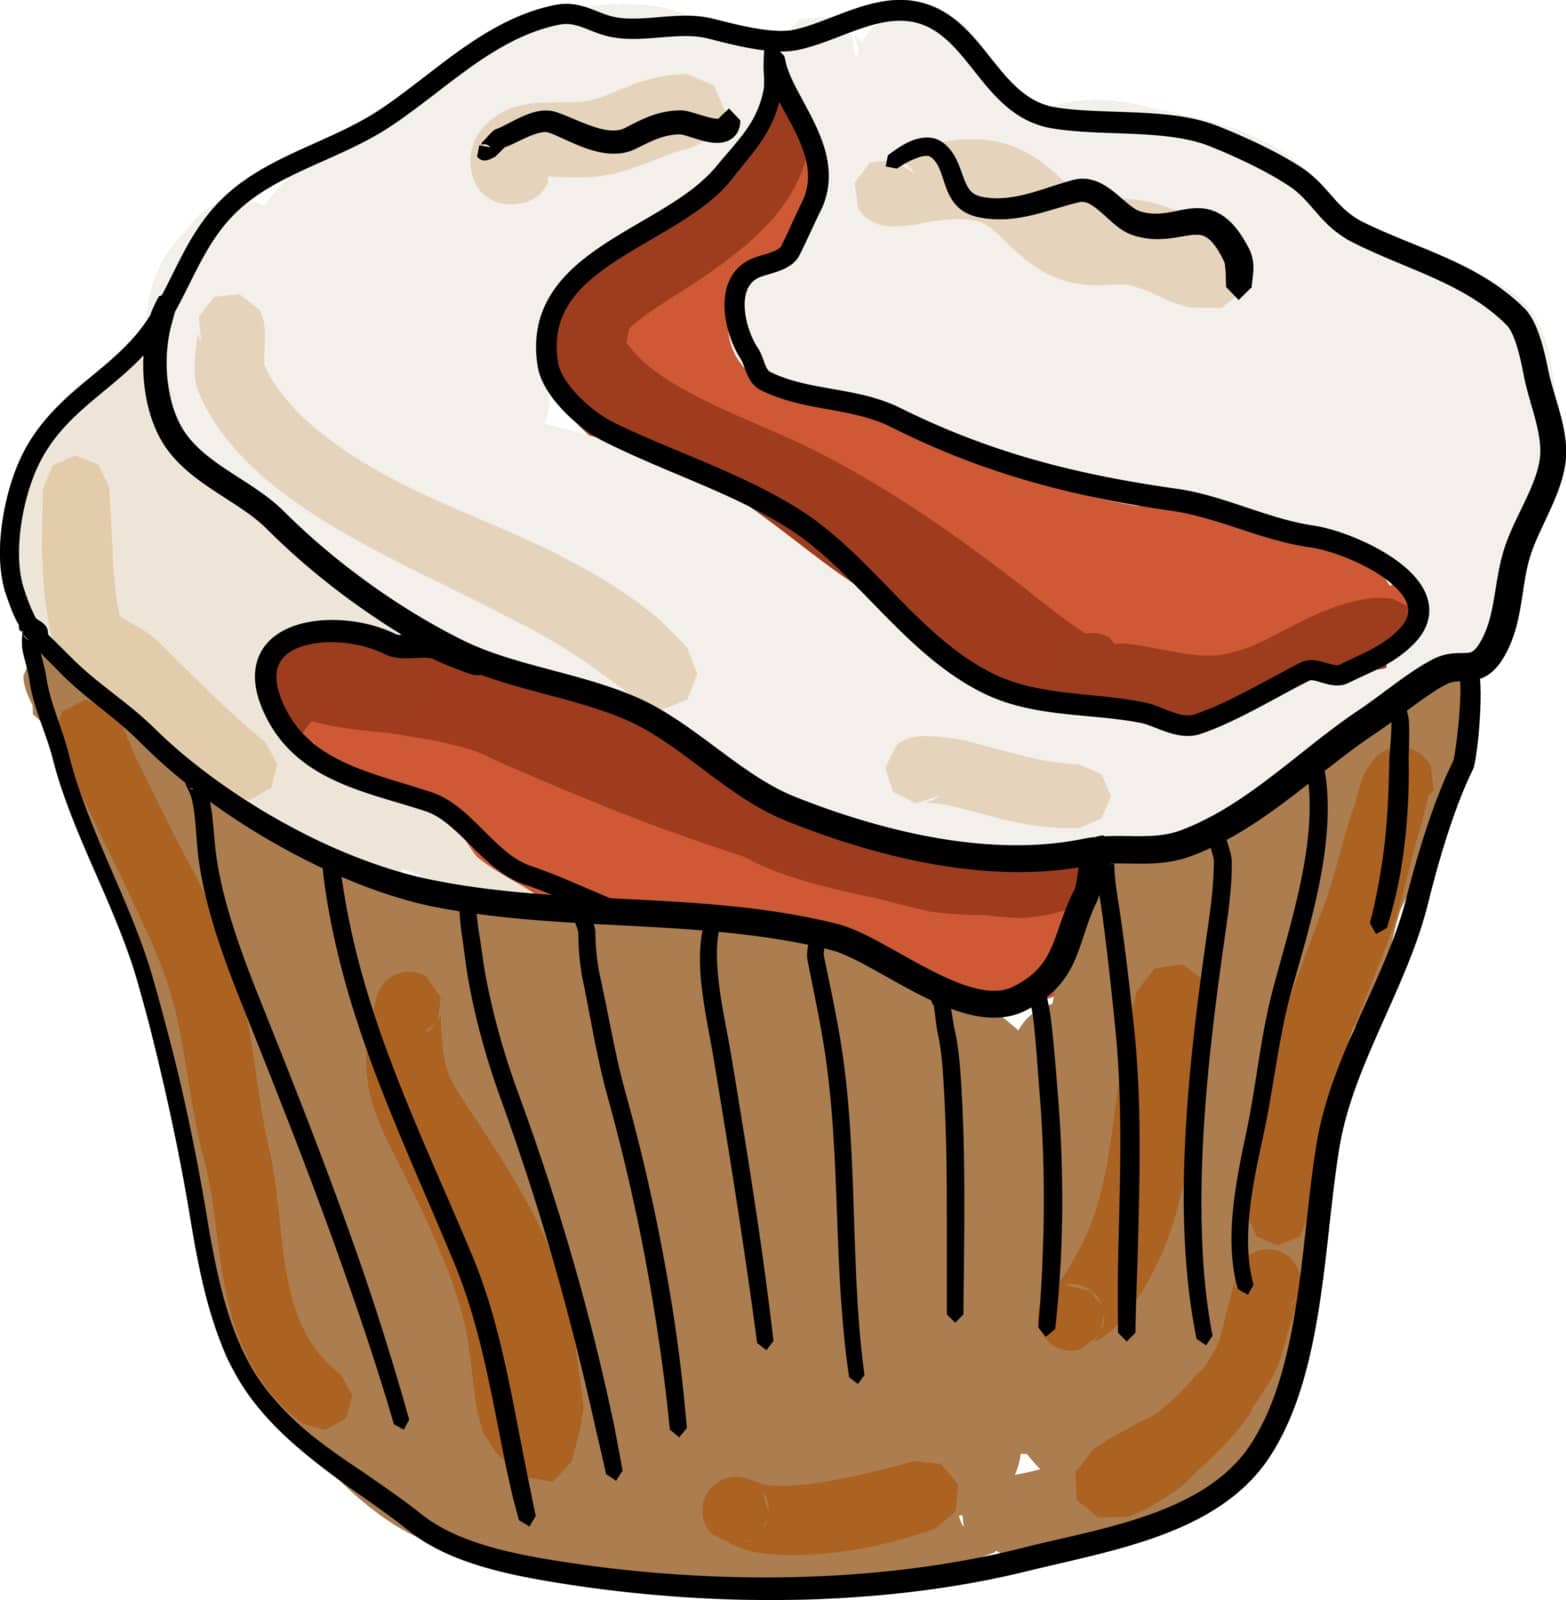 White cupcake, illustration, vector on white background.